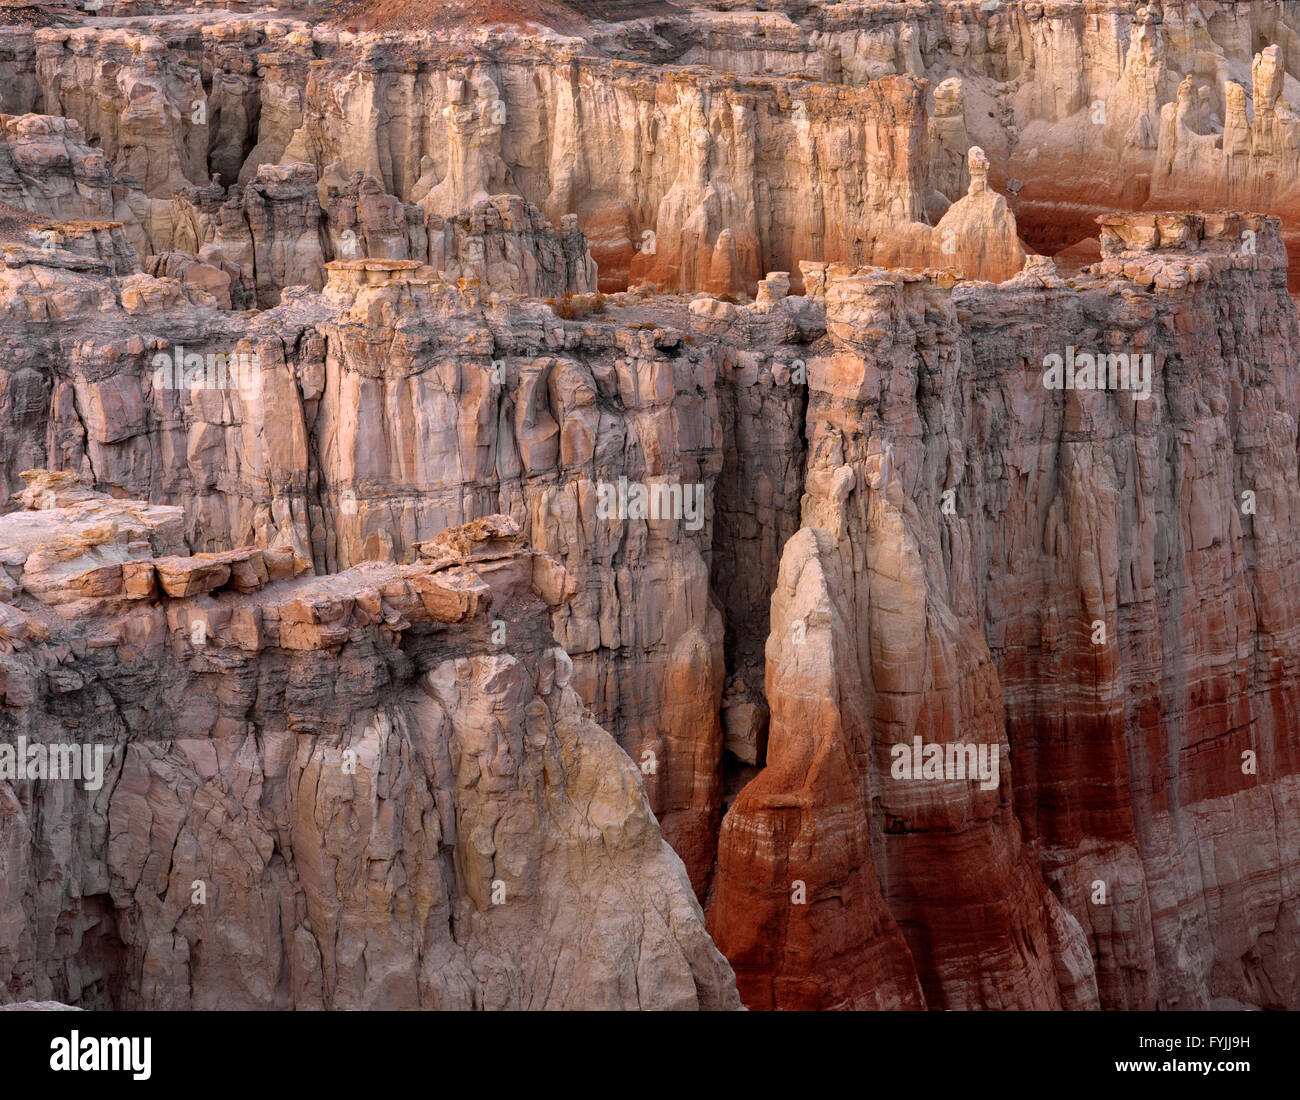 USA, Arizona, Coconino County, Moenkopi Plateau. Colorful, eroded sedimentary formations. Stock Photo